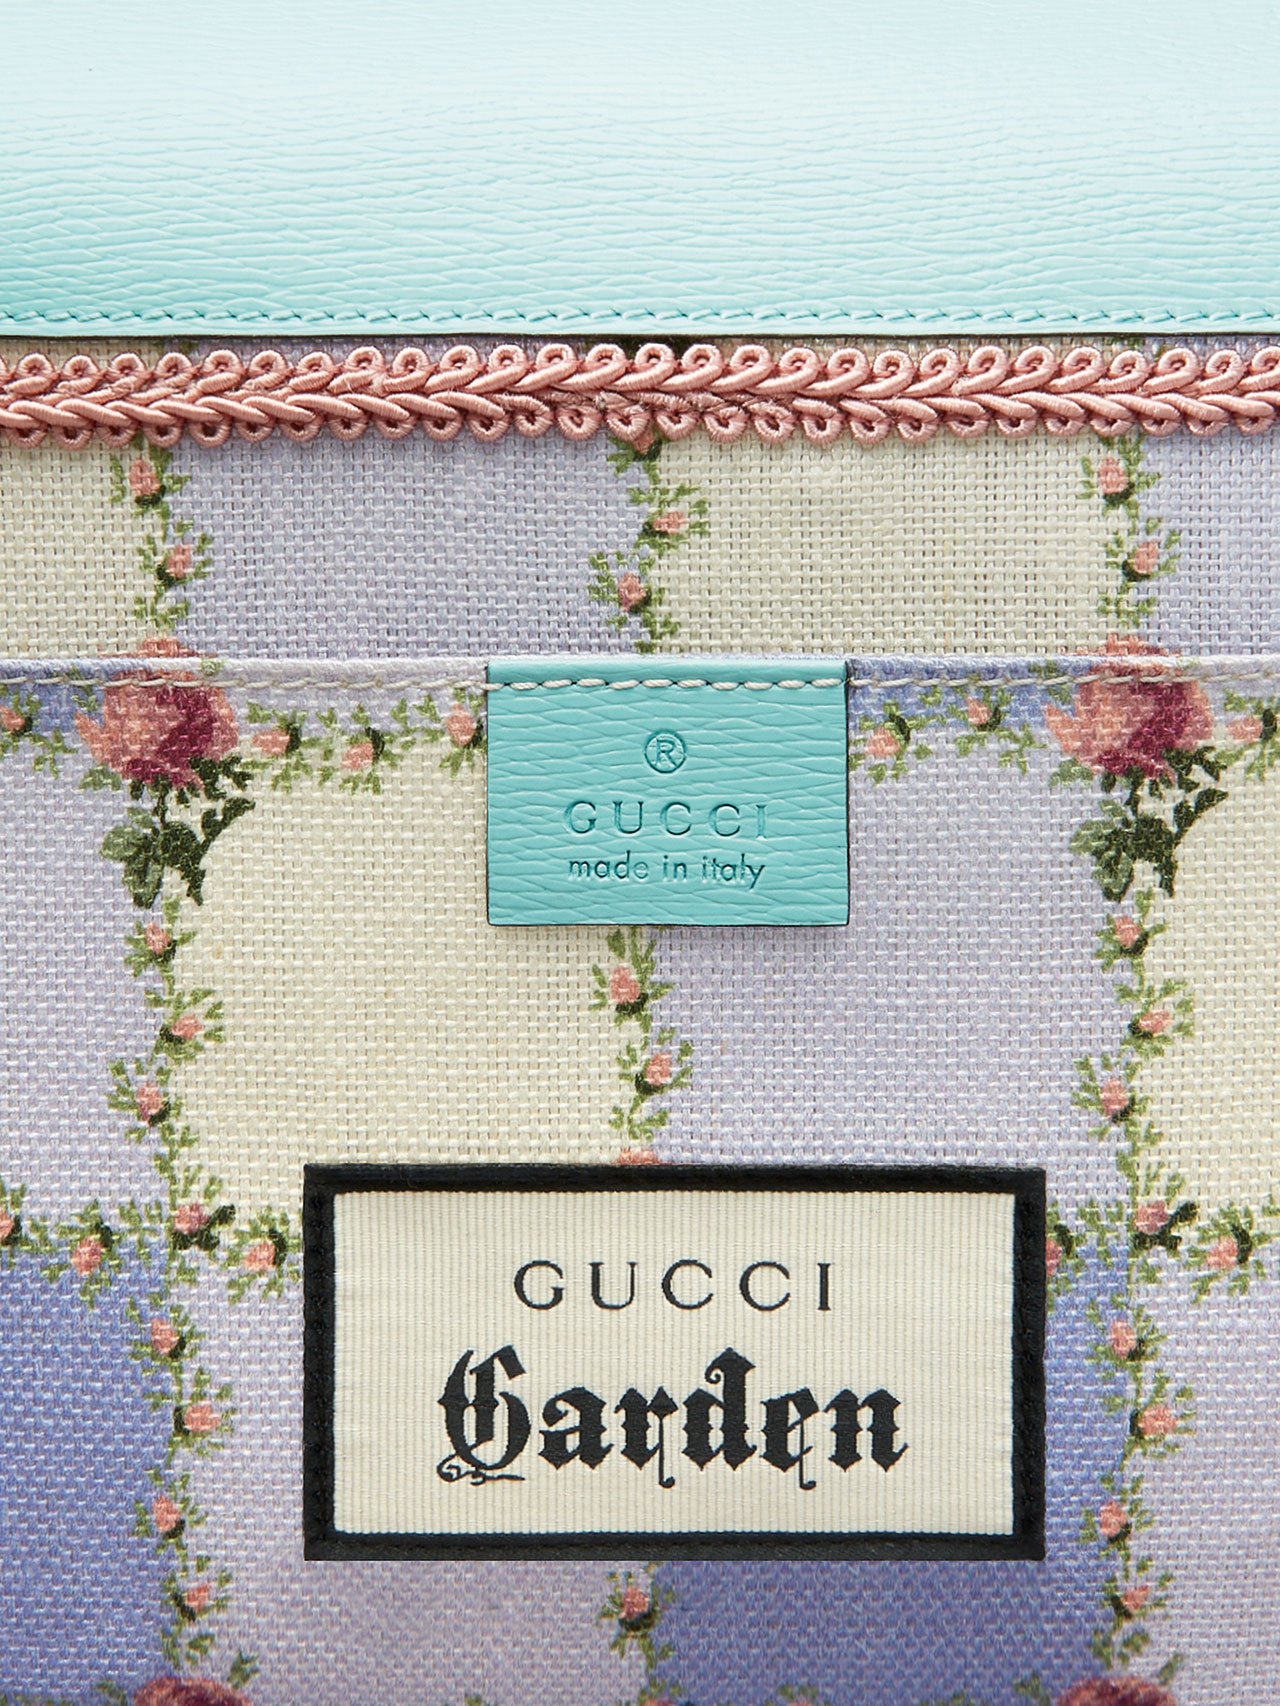 Handbag(detail) from the Gucci Garden series. Photo © Gucci.